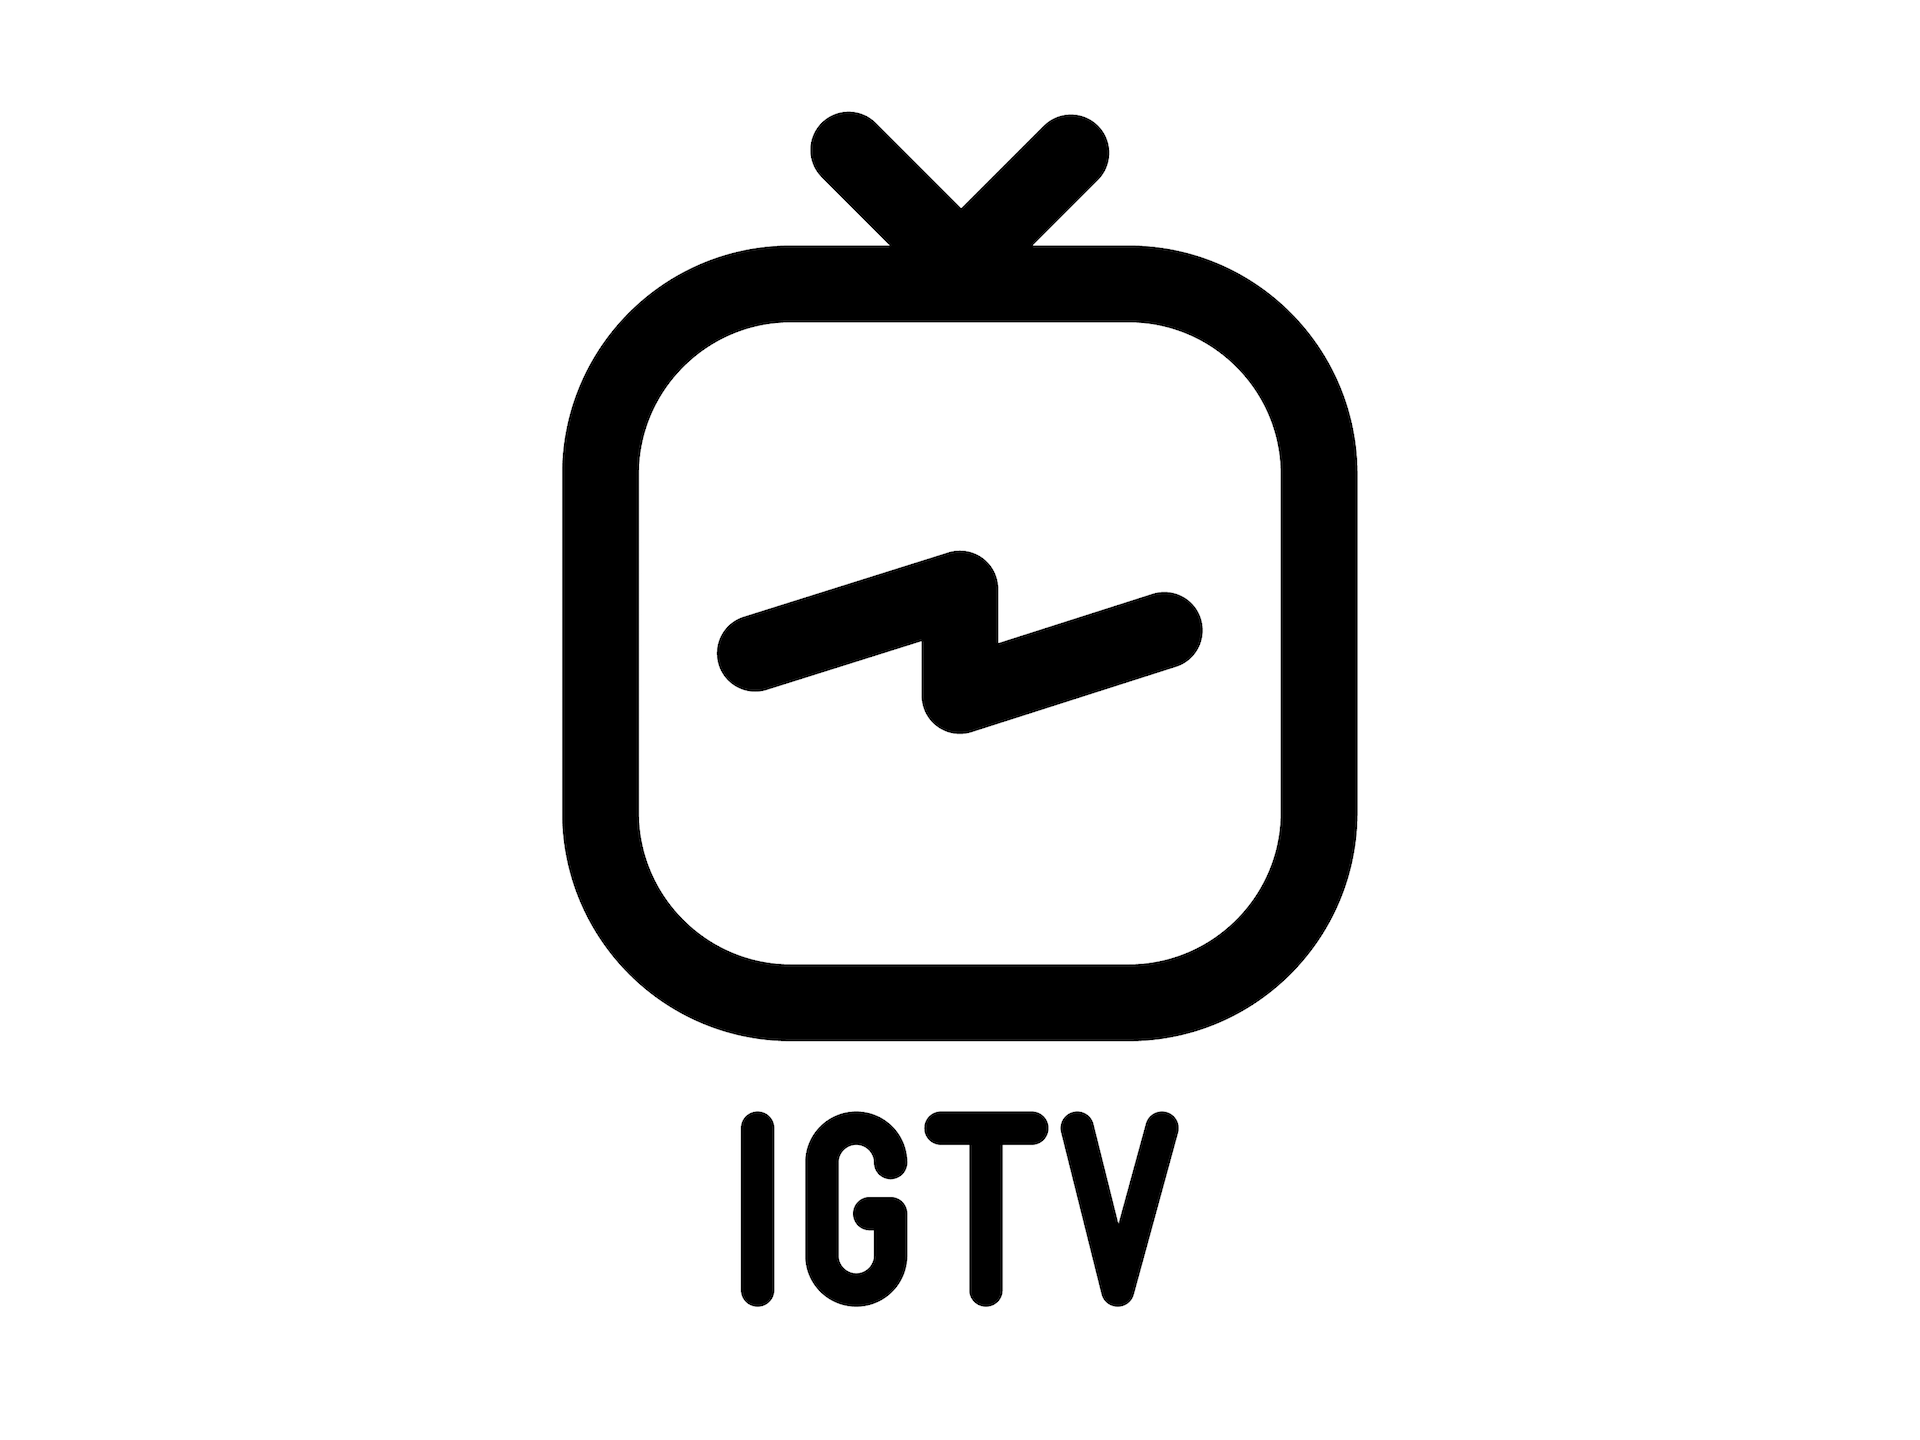 Free “Instagram TV” Vector Logo Set.